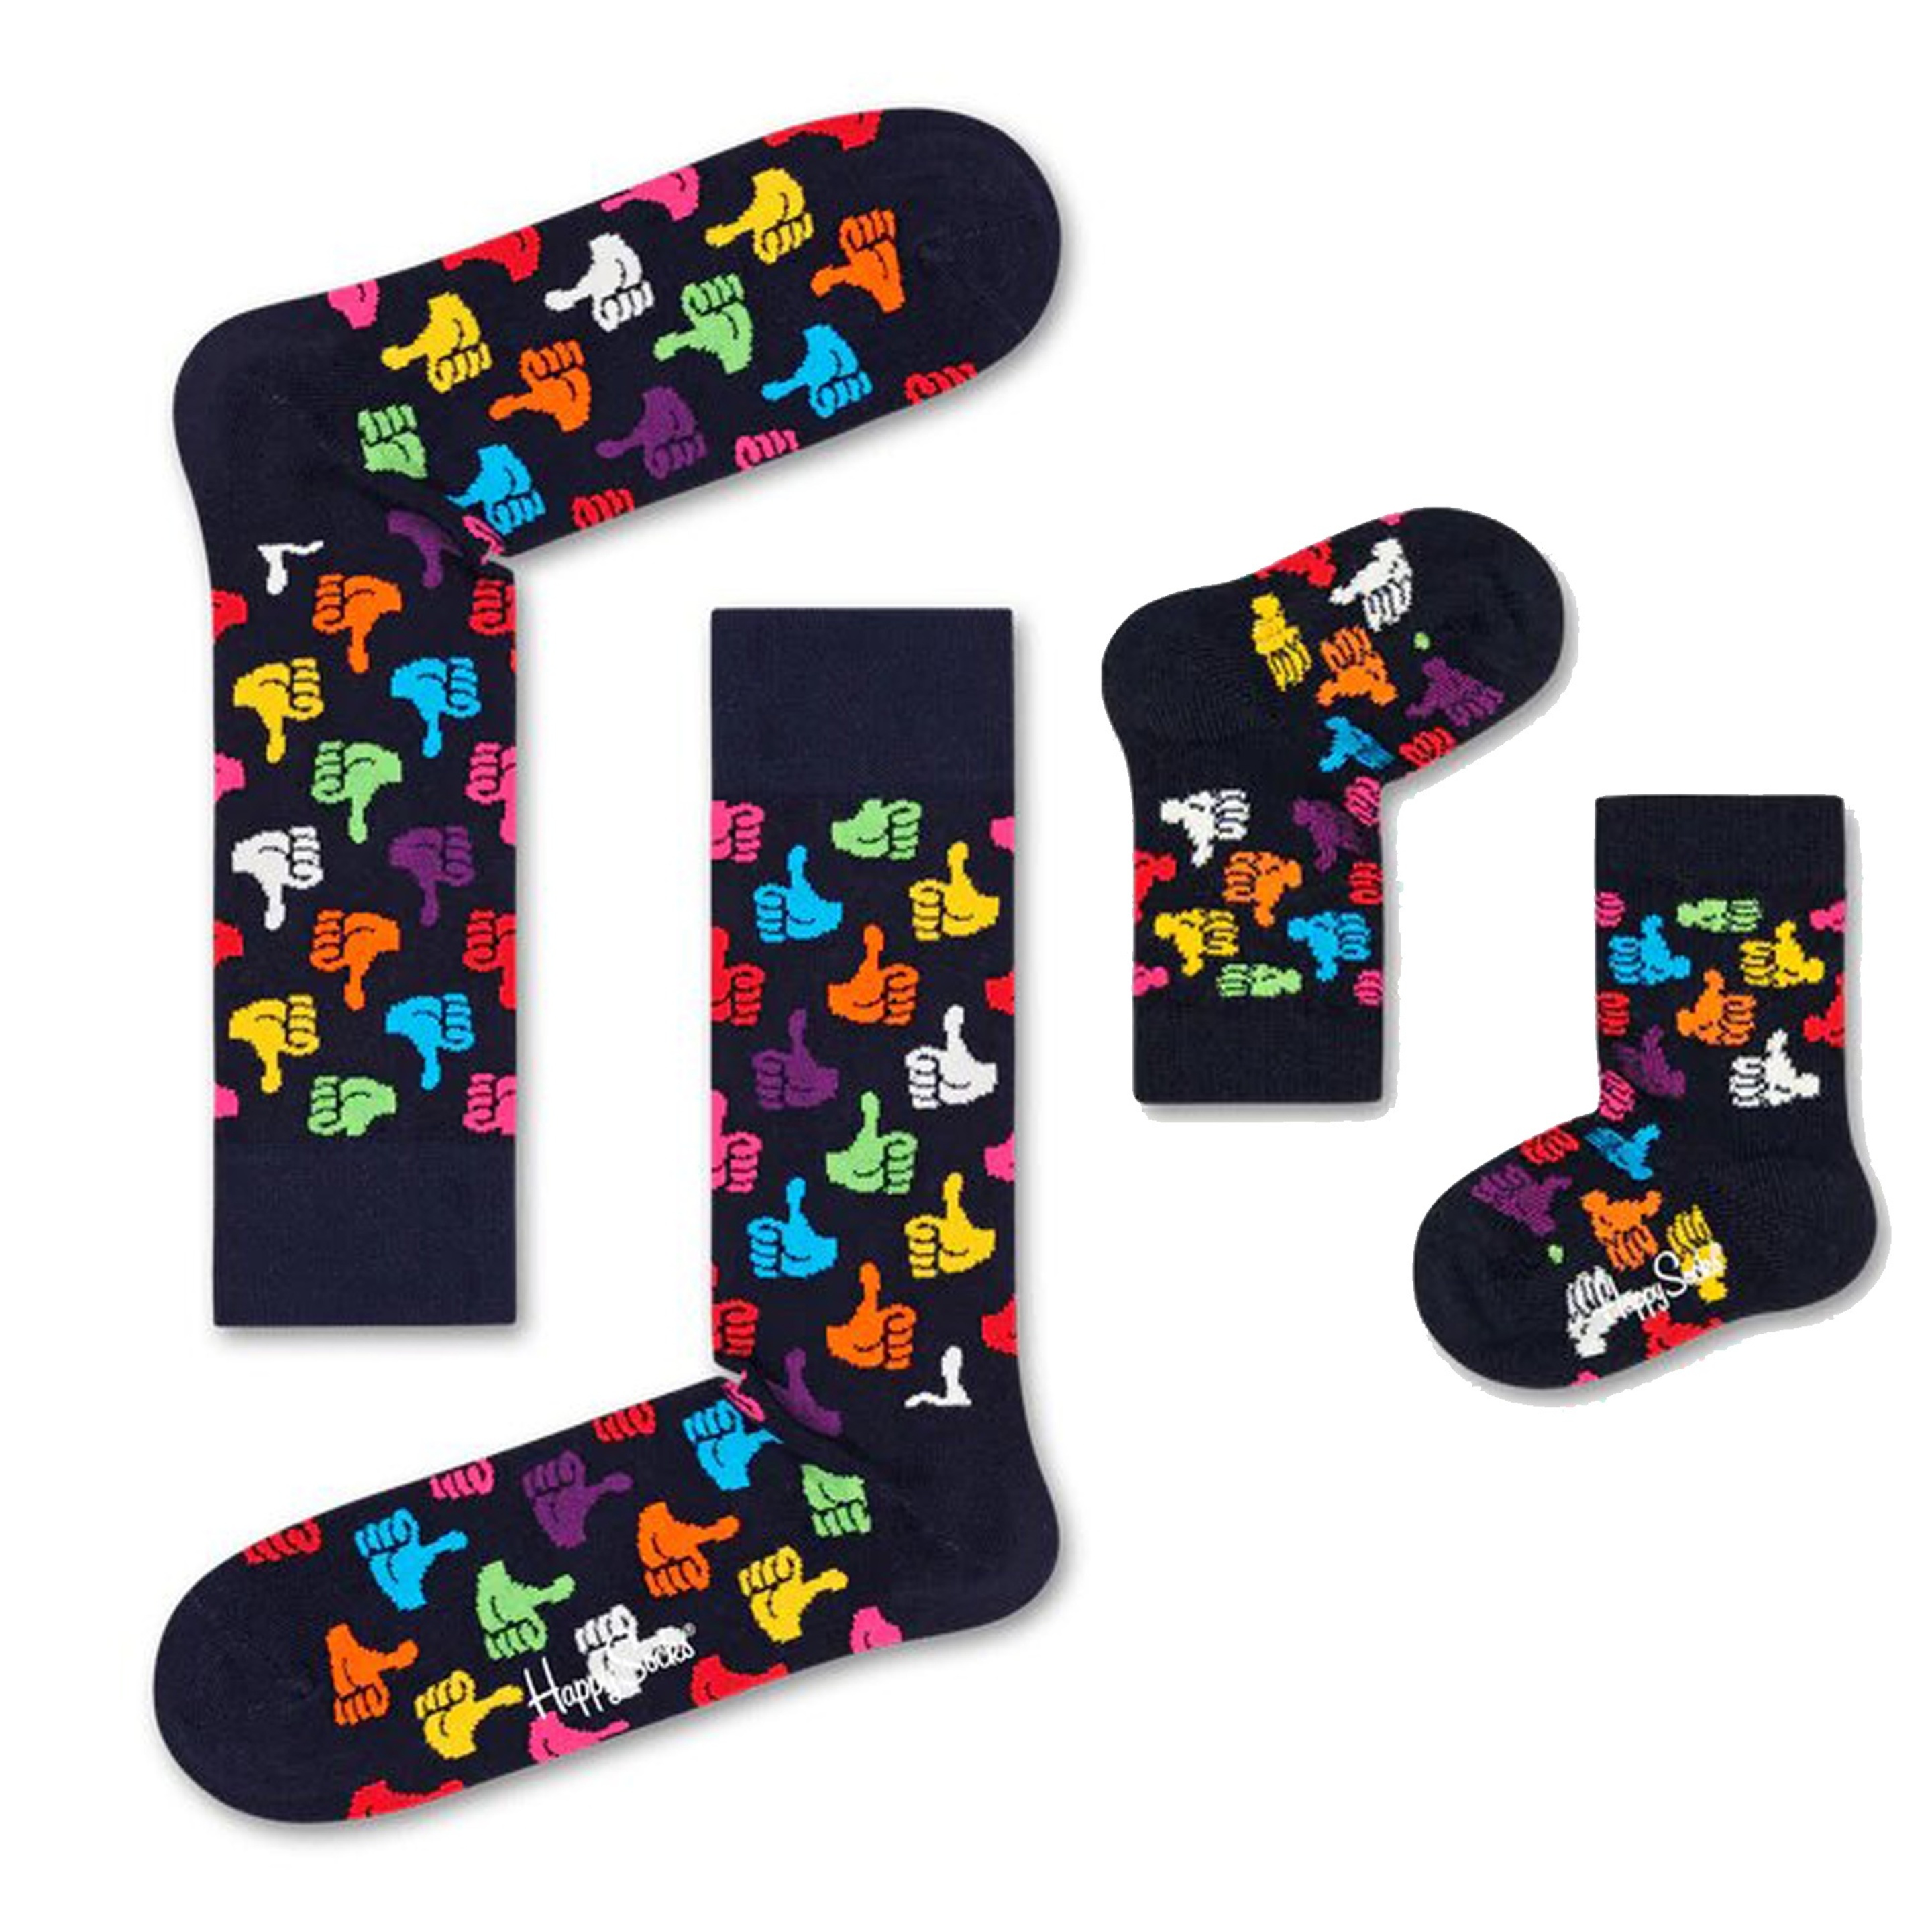 Par De Calcetines Happy Socks Mini Me Confetti Palm - multicolor - 